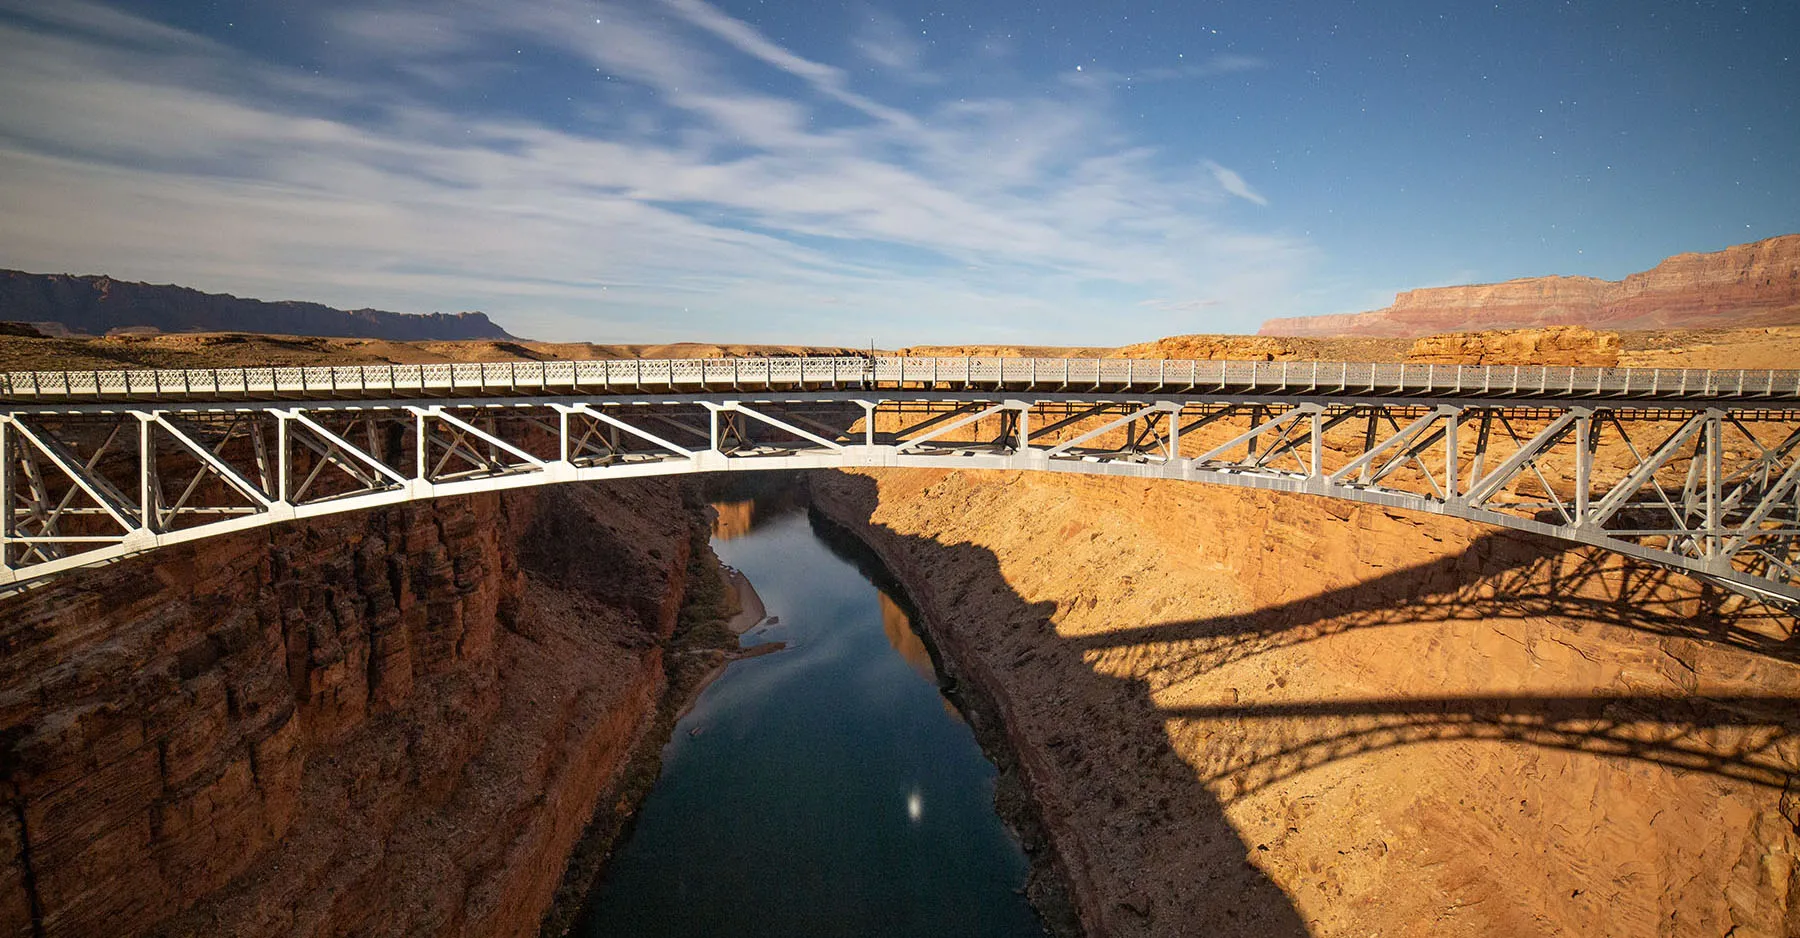 The New Navajo Bridge by moonlight